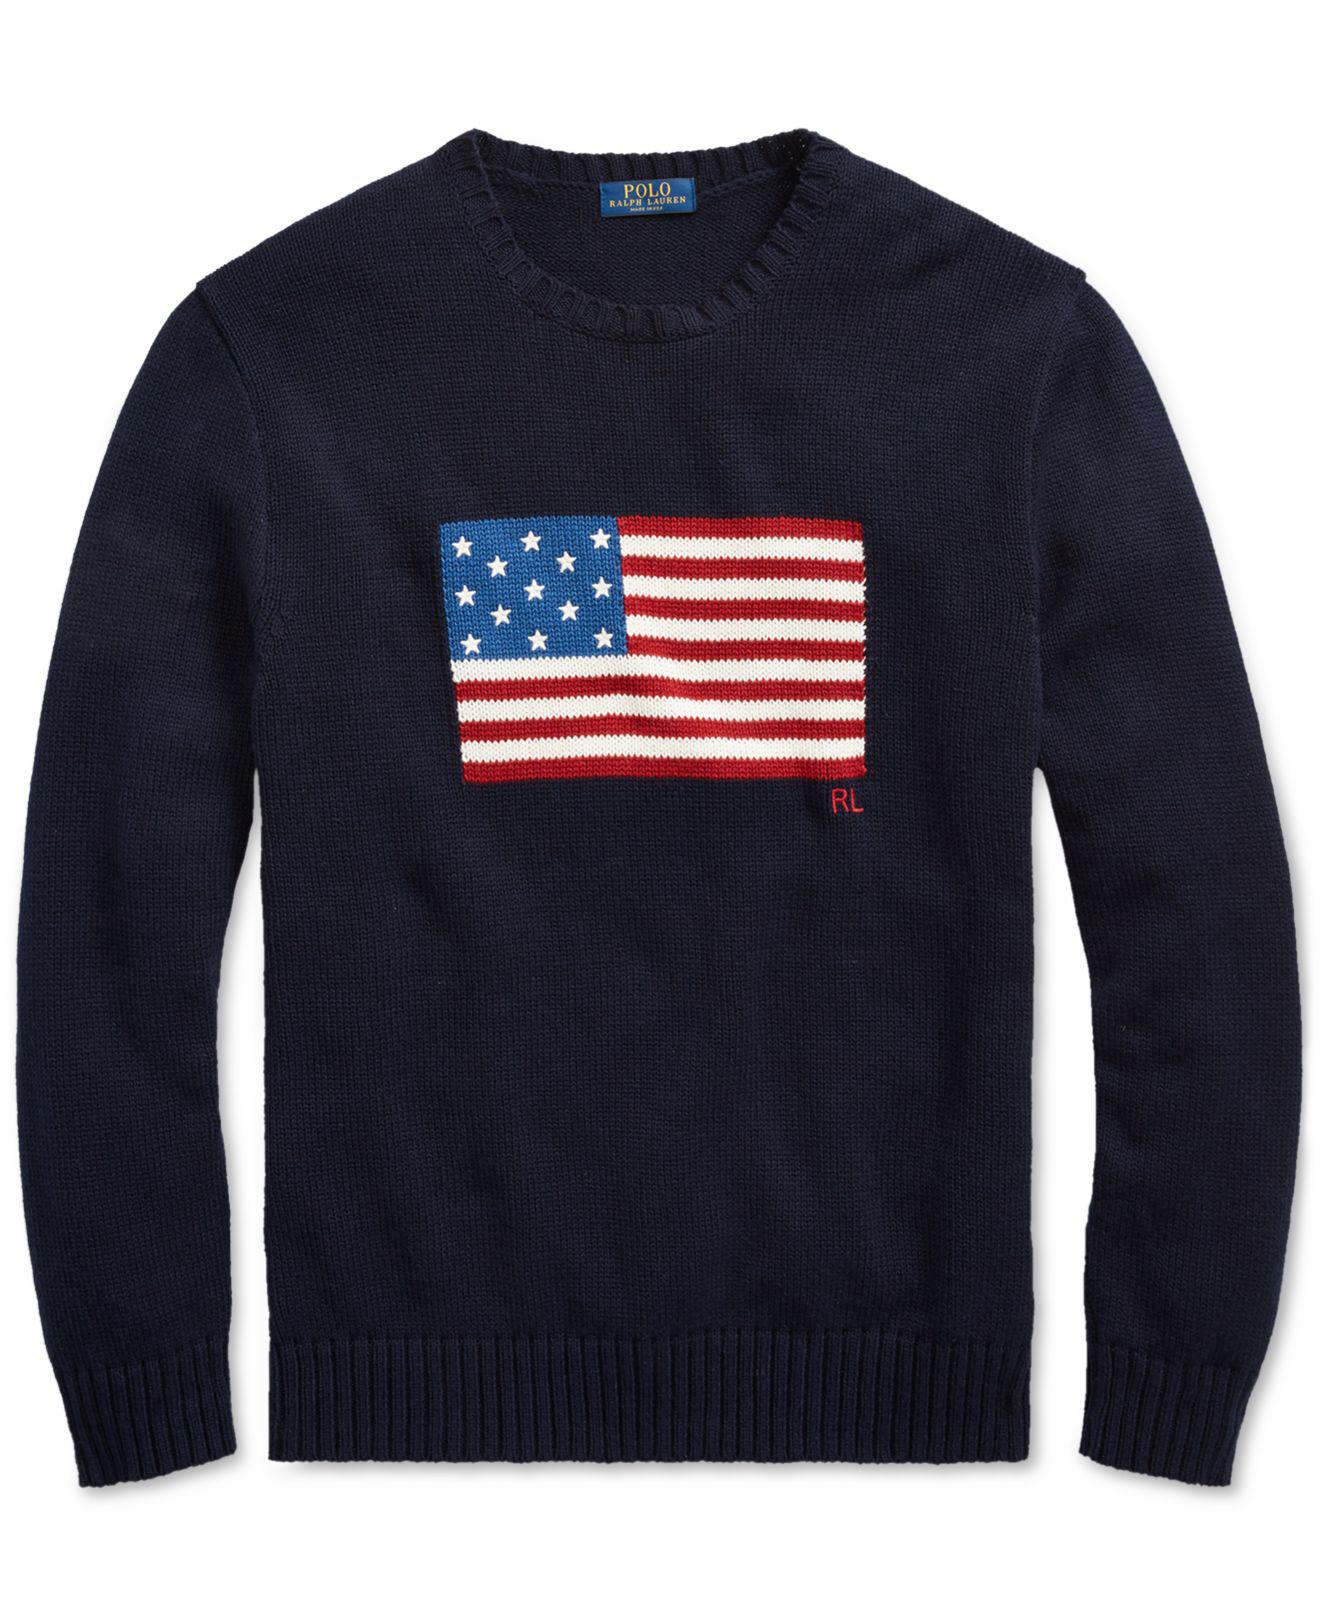 Polo Ralph Lauren Cotton Ralph Lauren The Iconic Flag Sweater in 